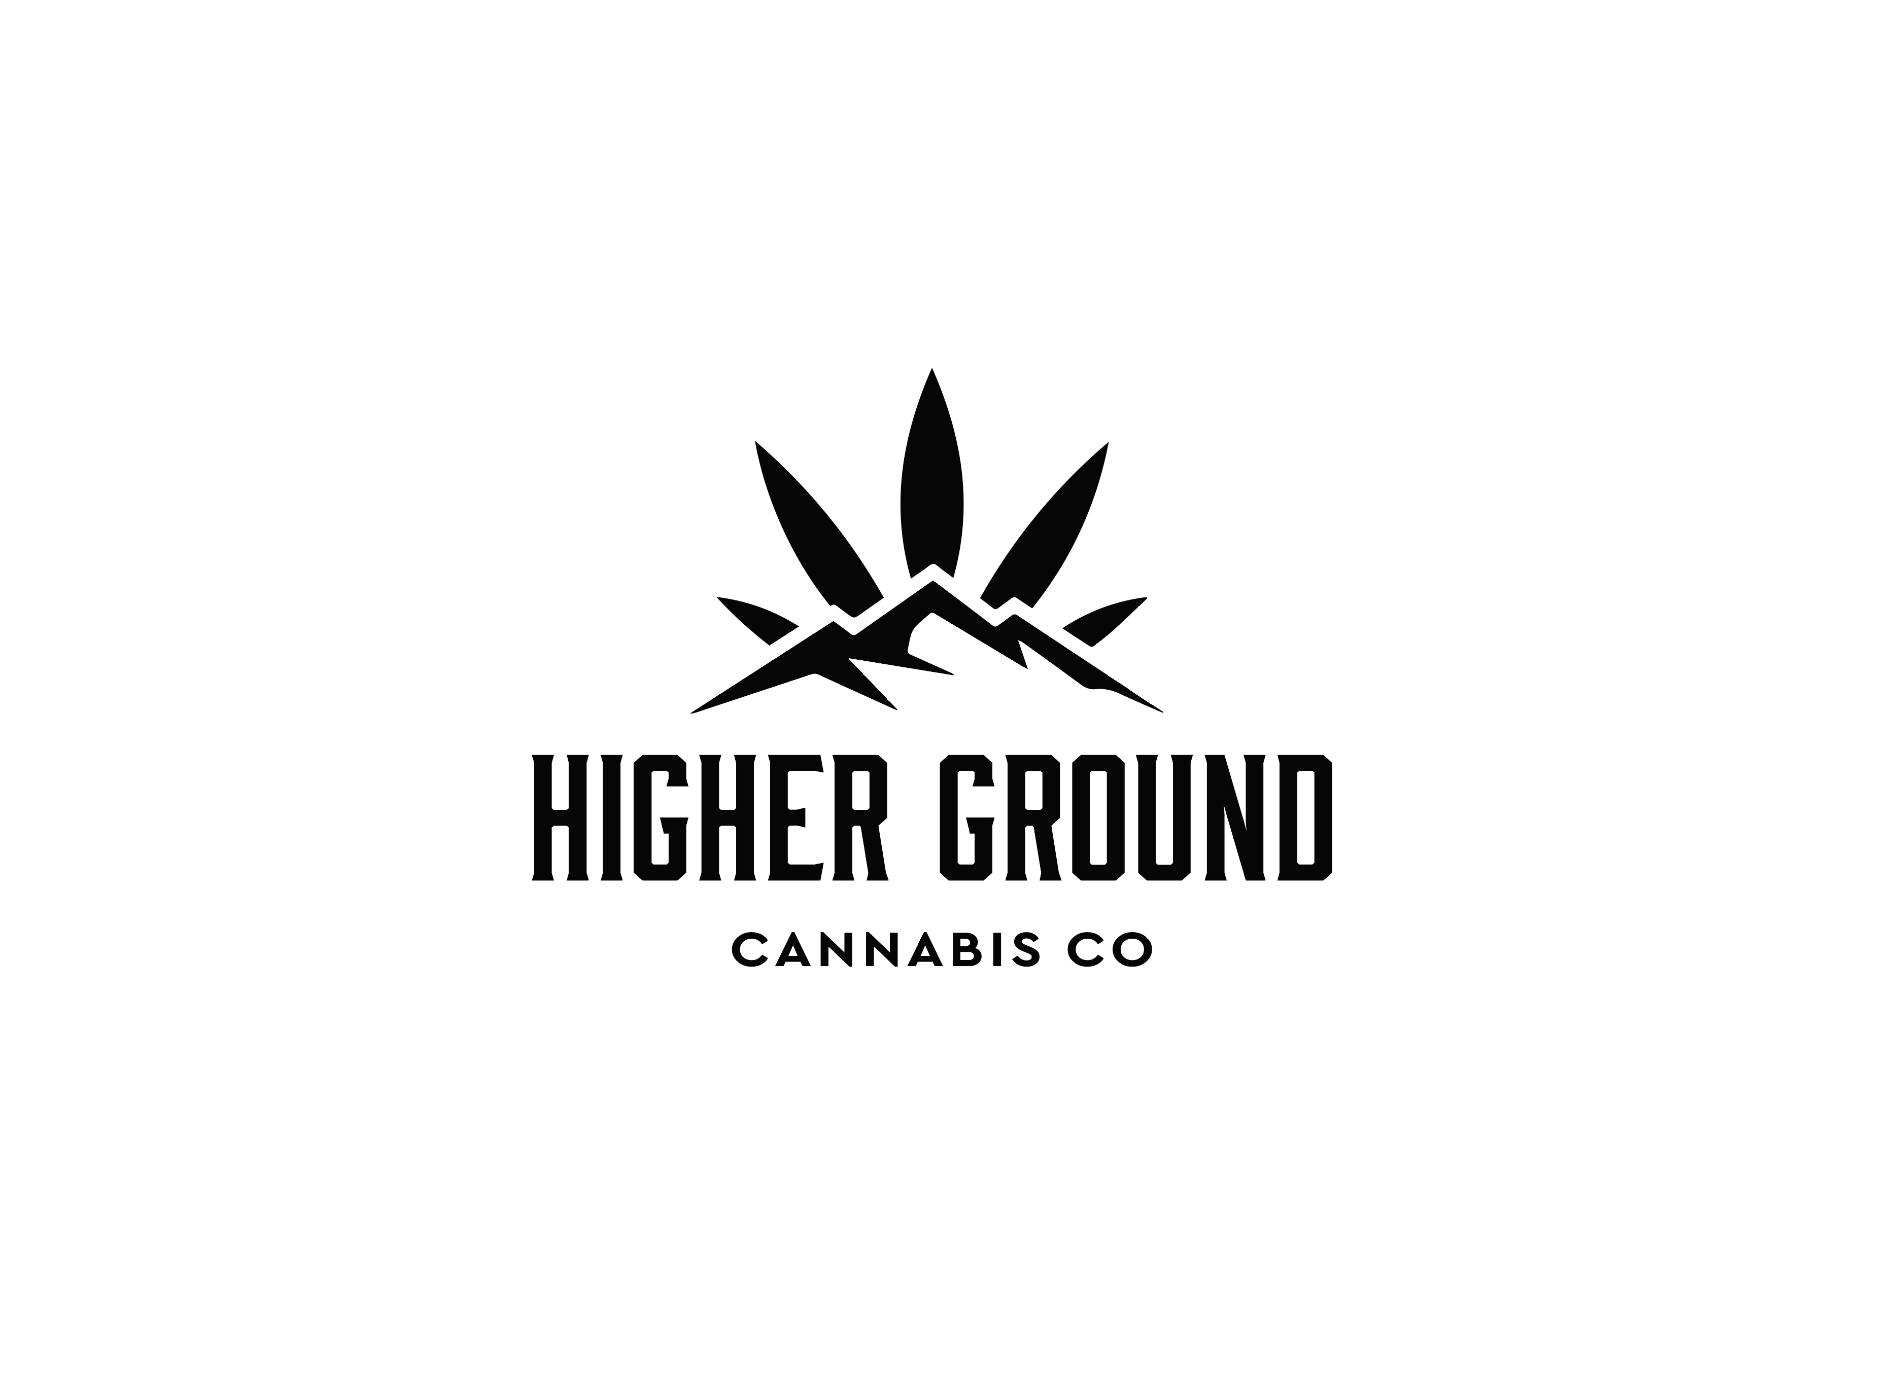 Higher Ground Cannabis Co logo